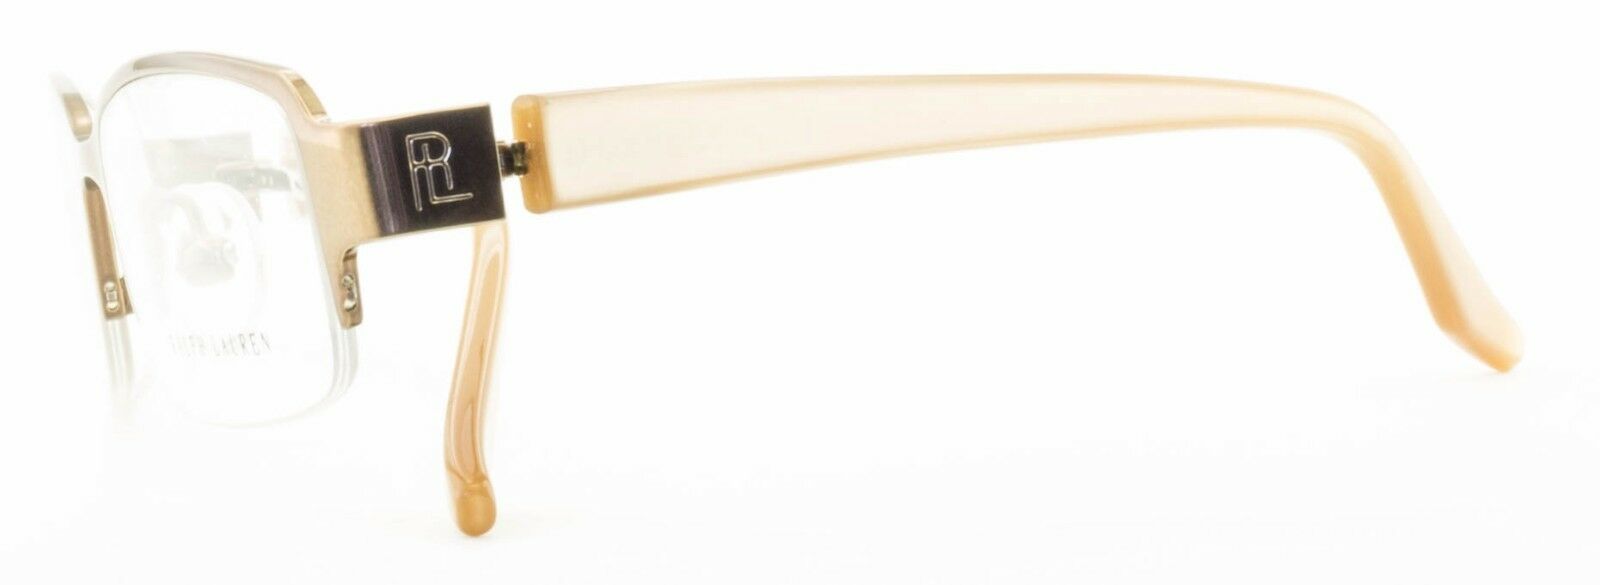 RALPH LAUREN RL 1479 N2X Eyewear FRAMES RX Optical Glasses Eyeglasses Italy -New